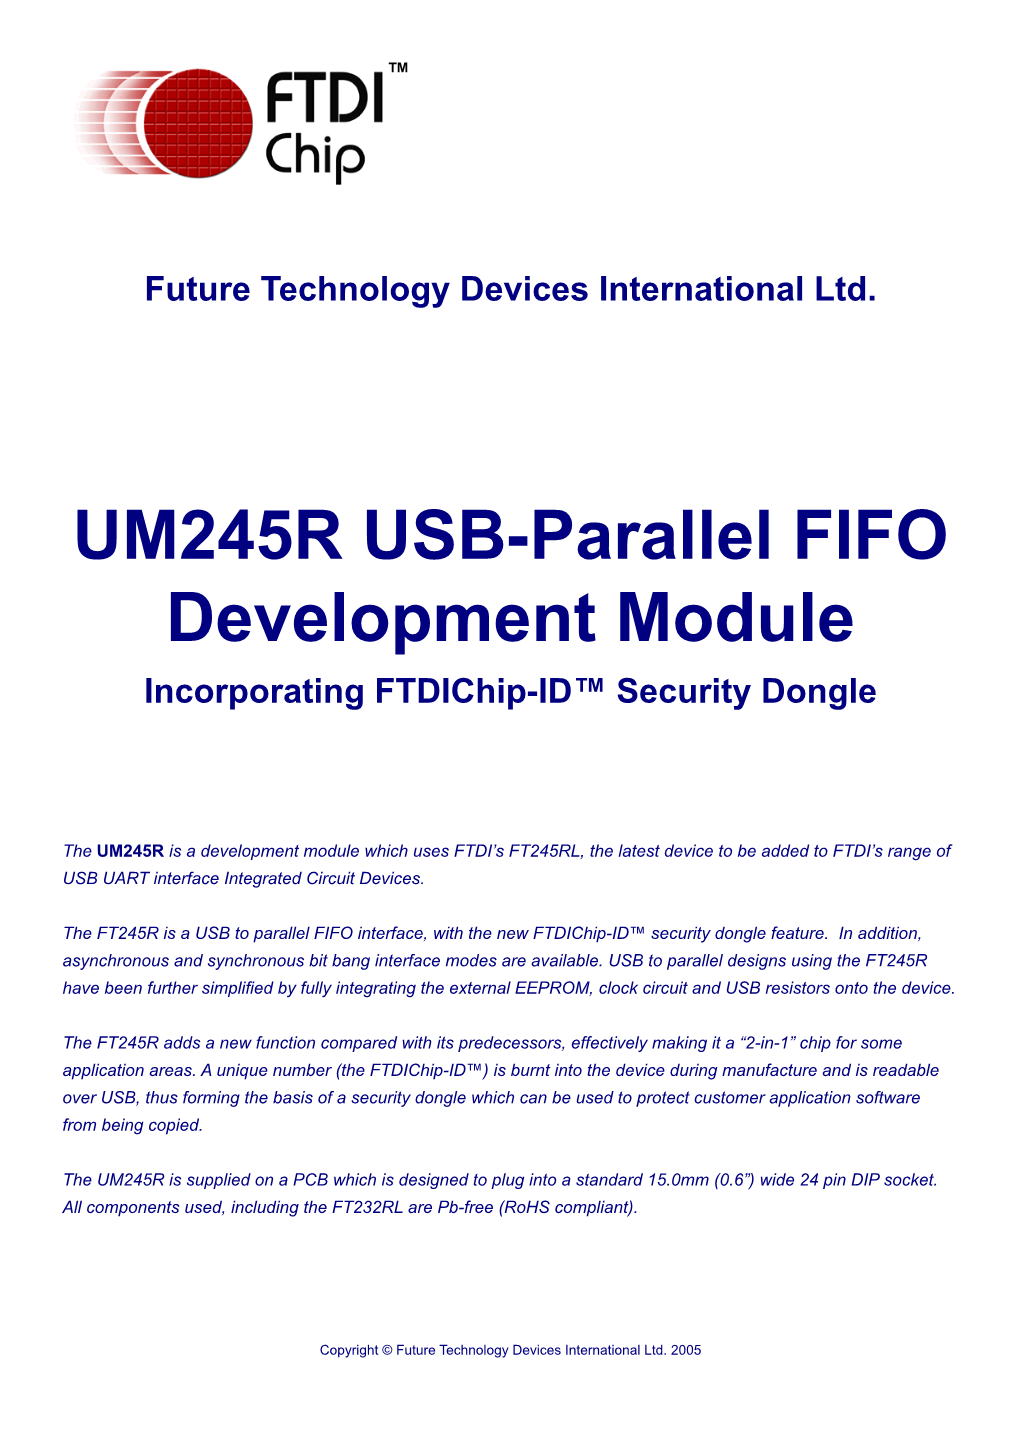 UM245R USB-Parallel FIFO Development Module Incorporating Ftdichip-ID™ Security Dongle